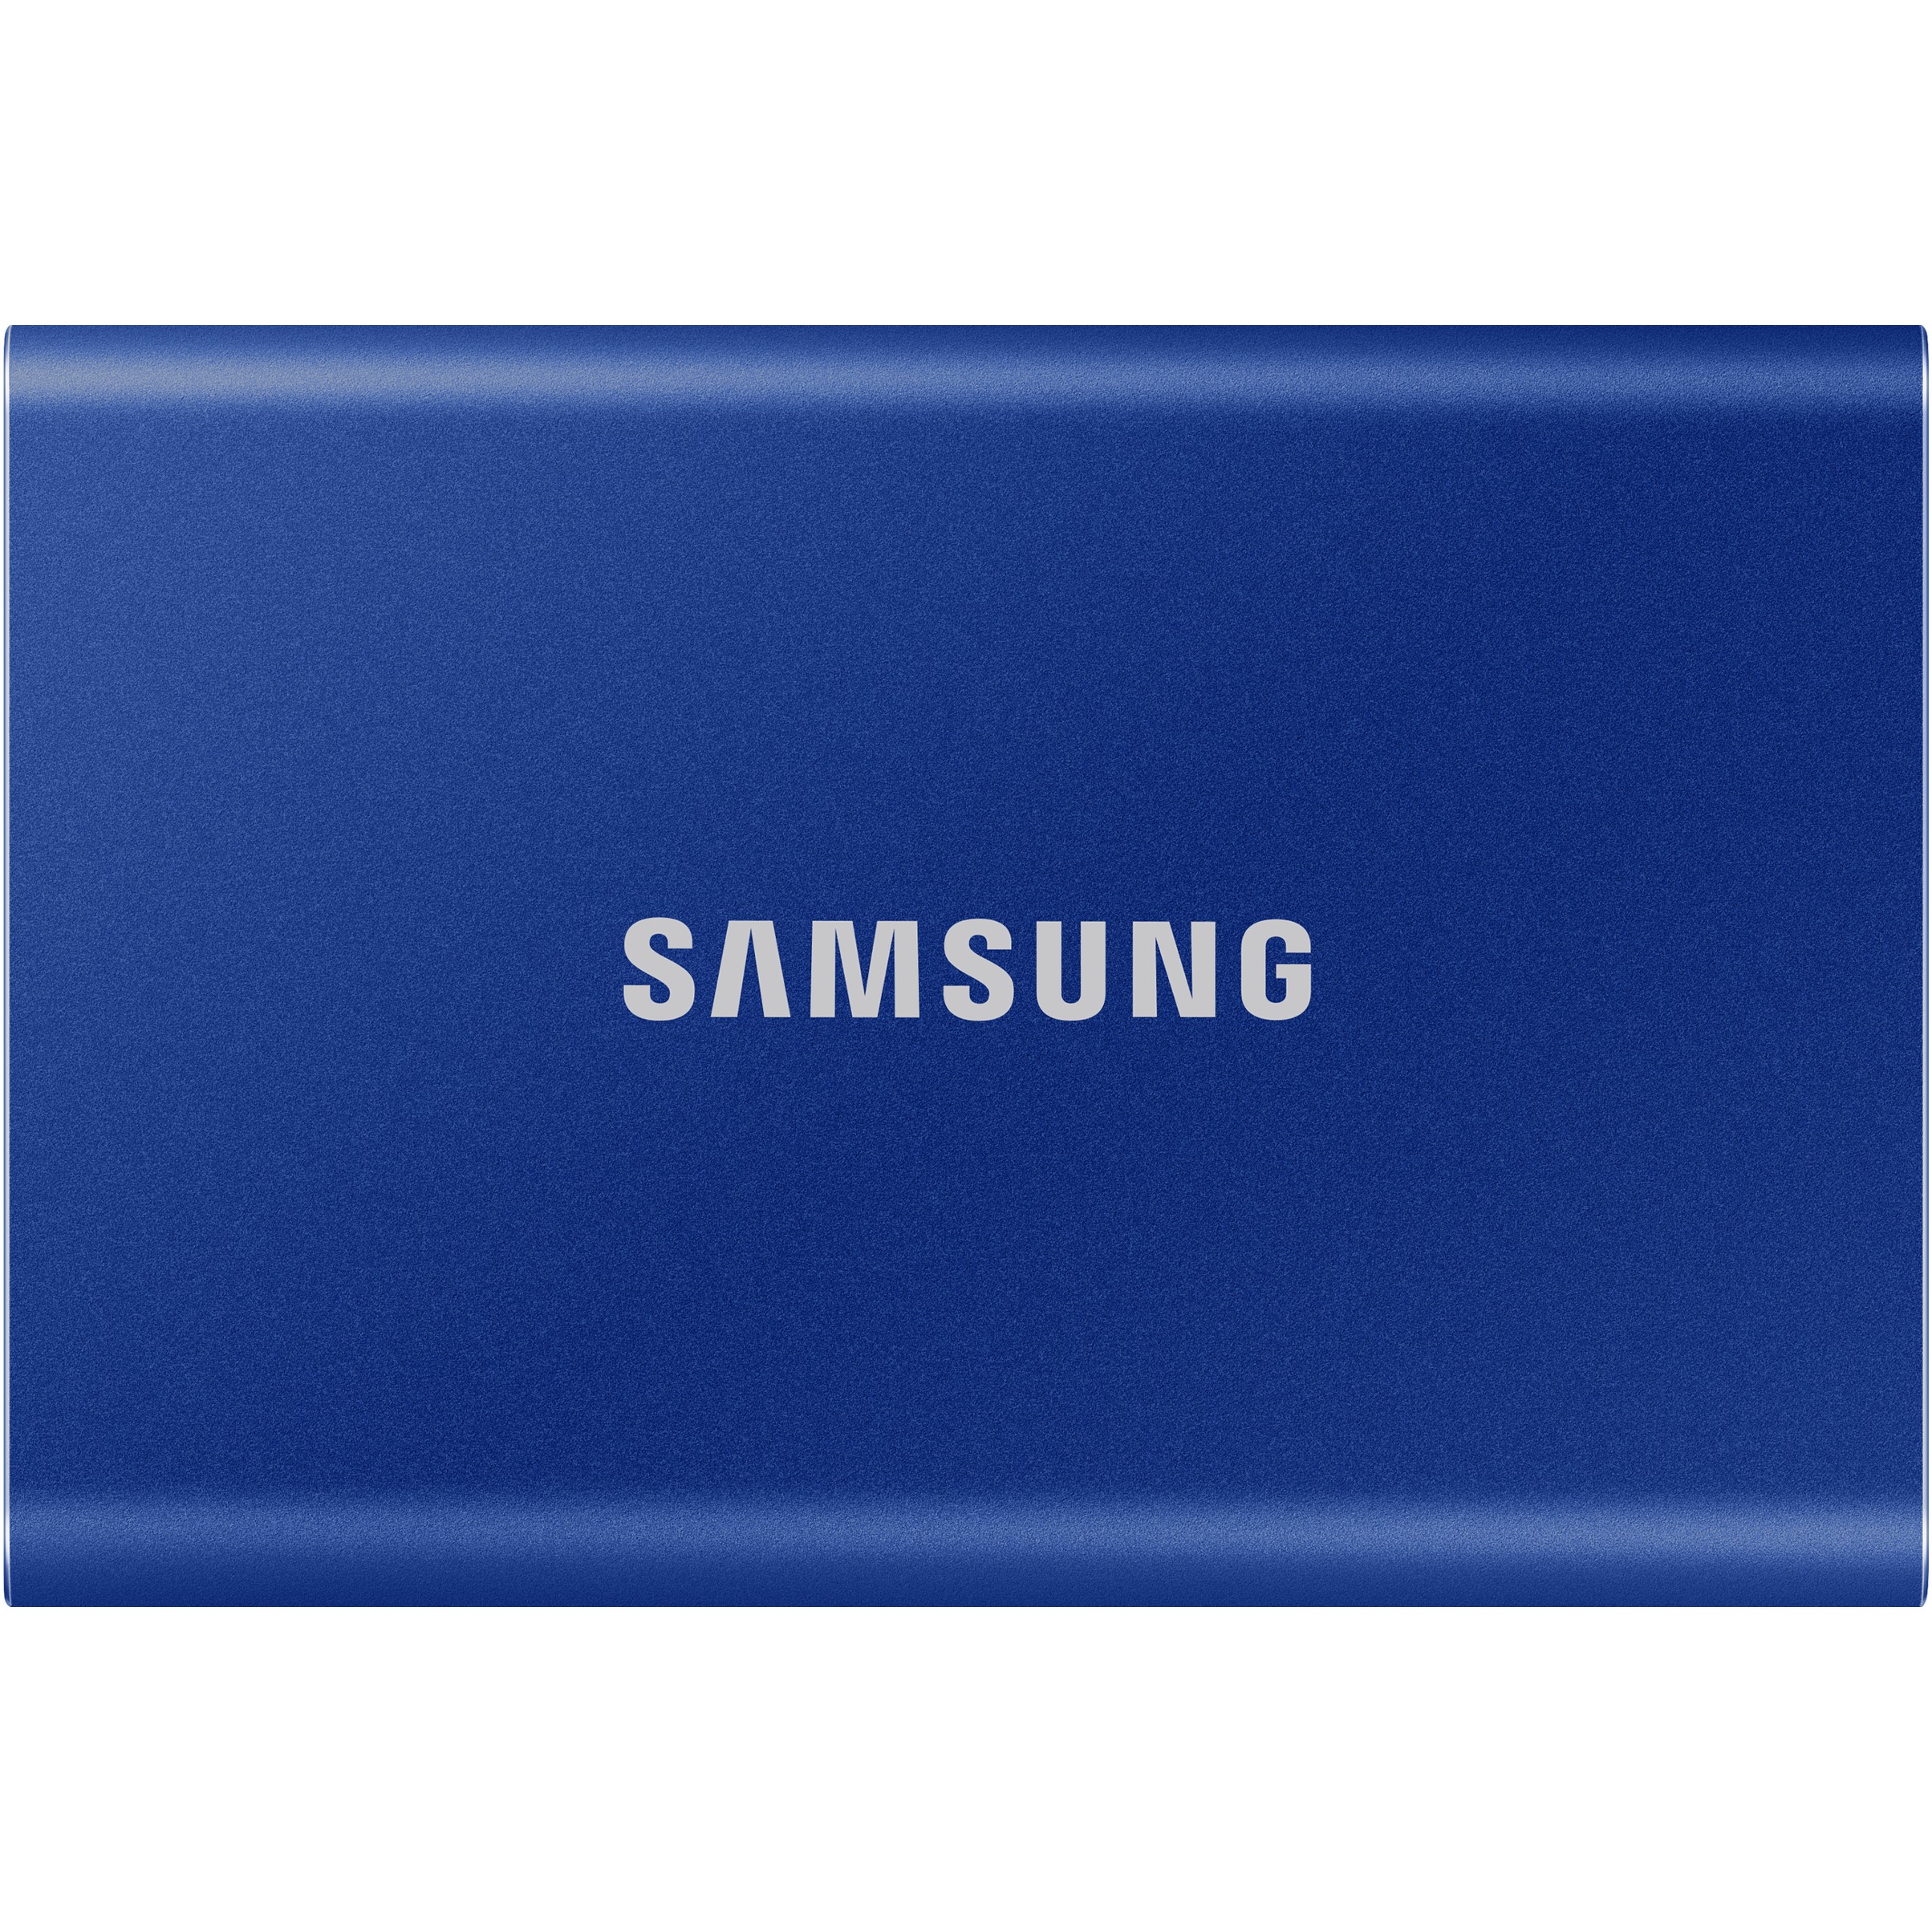 Samsung Portable SSD T7 500 GB Blau